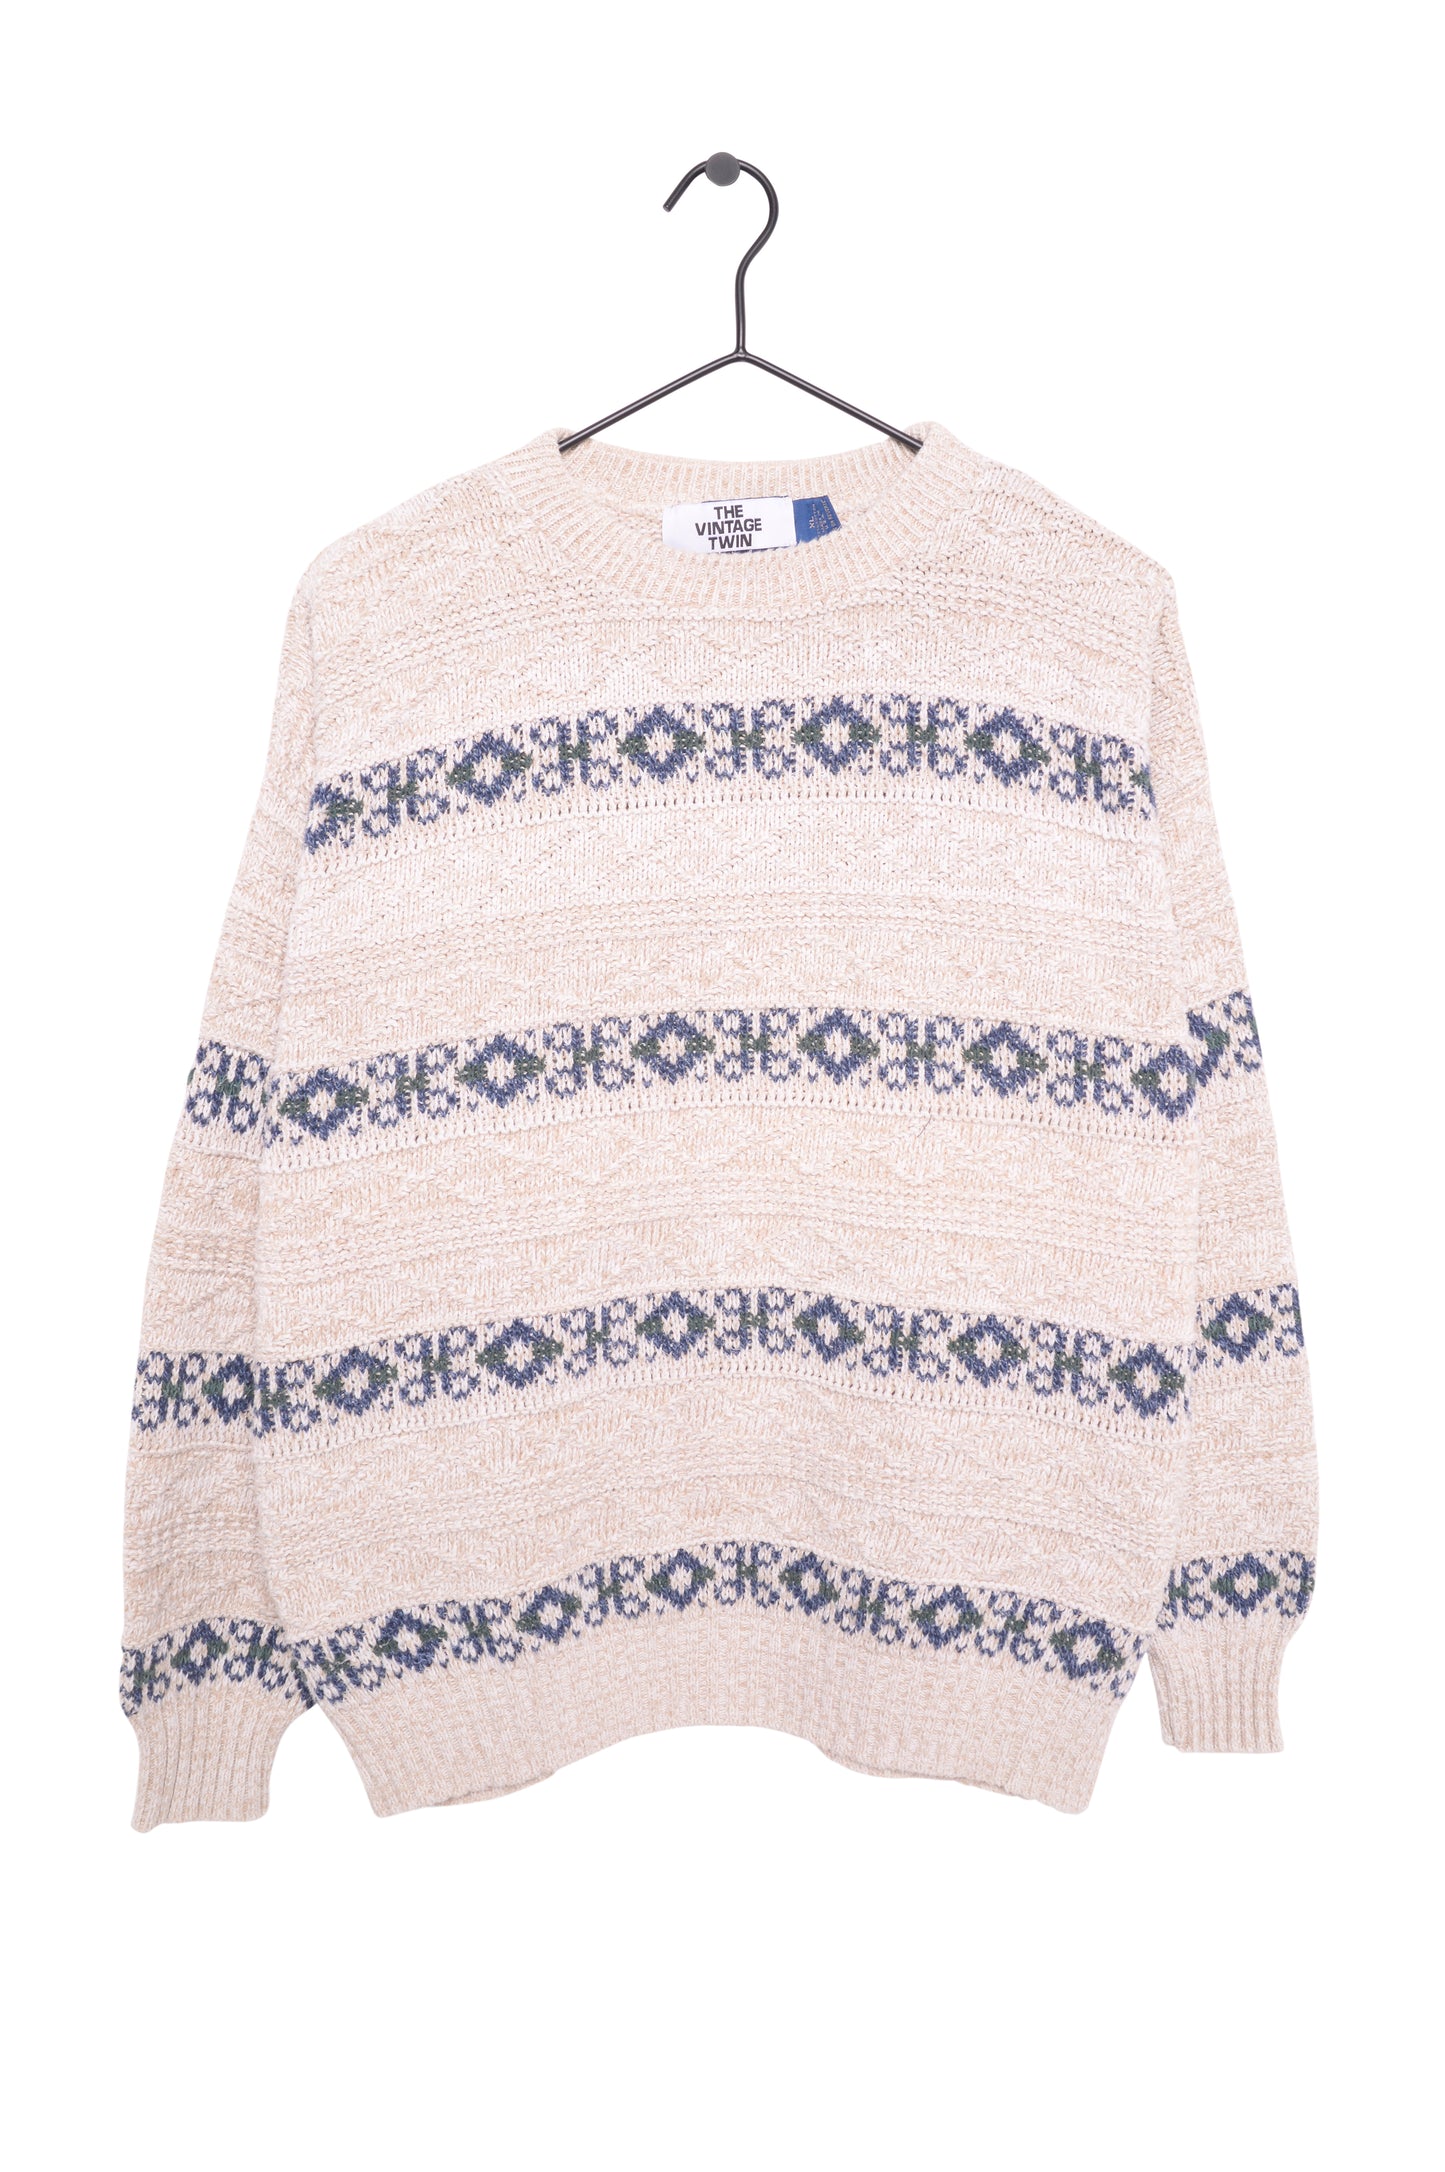 1990s Textured Sweater USA